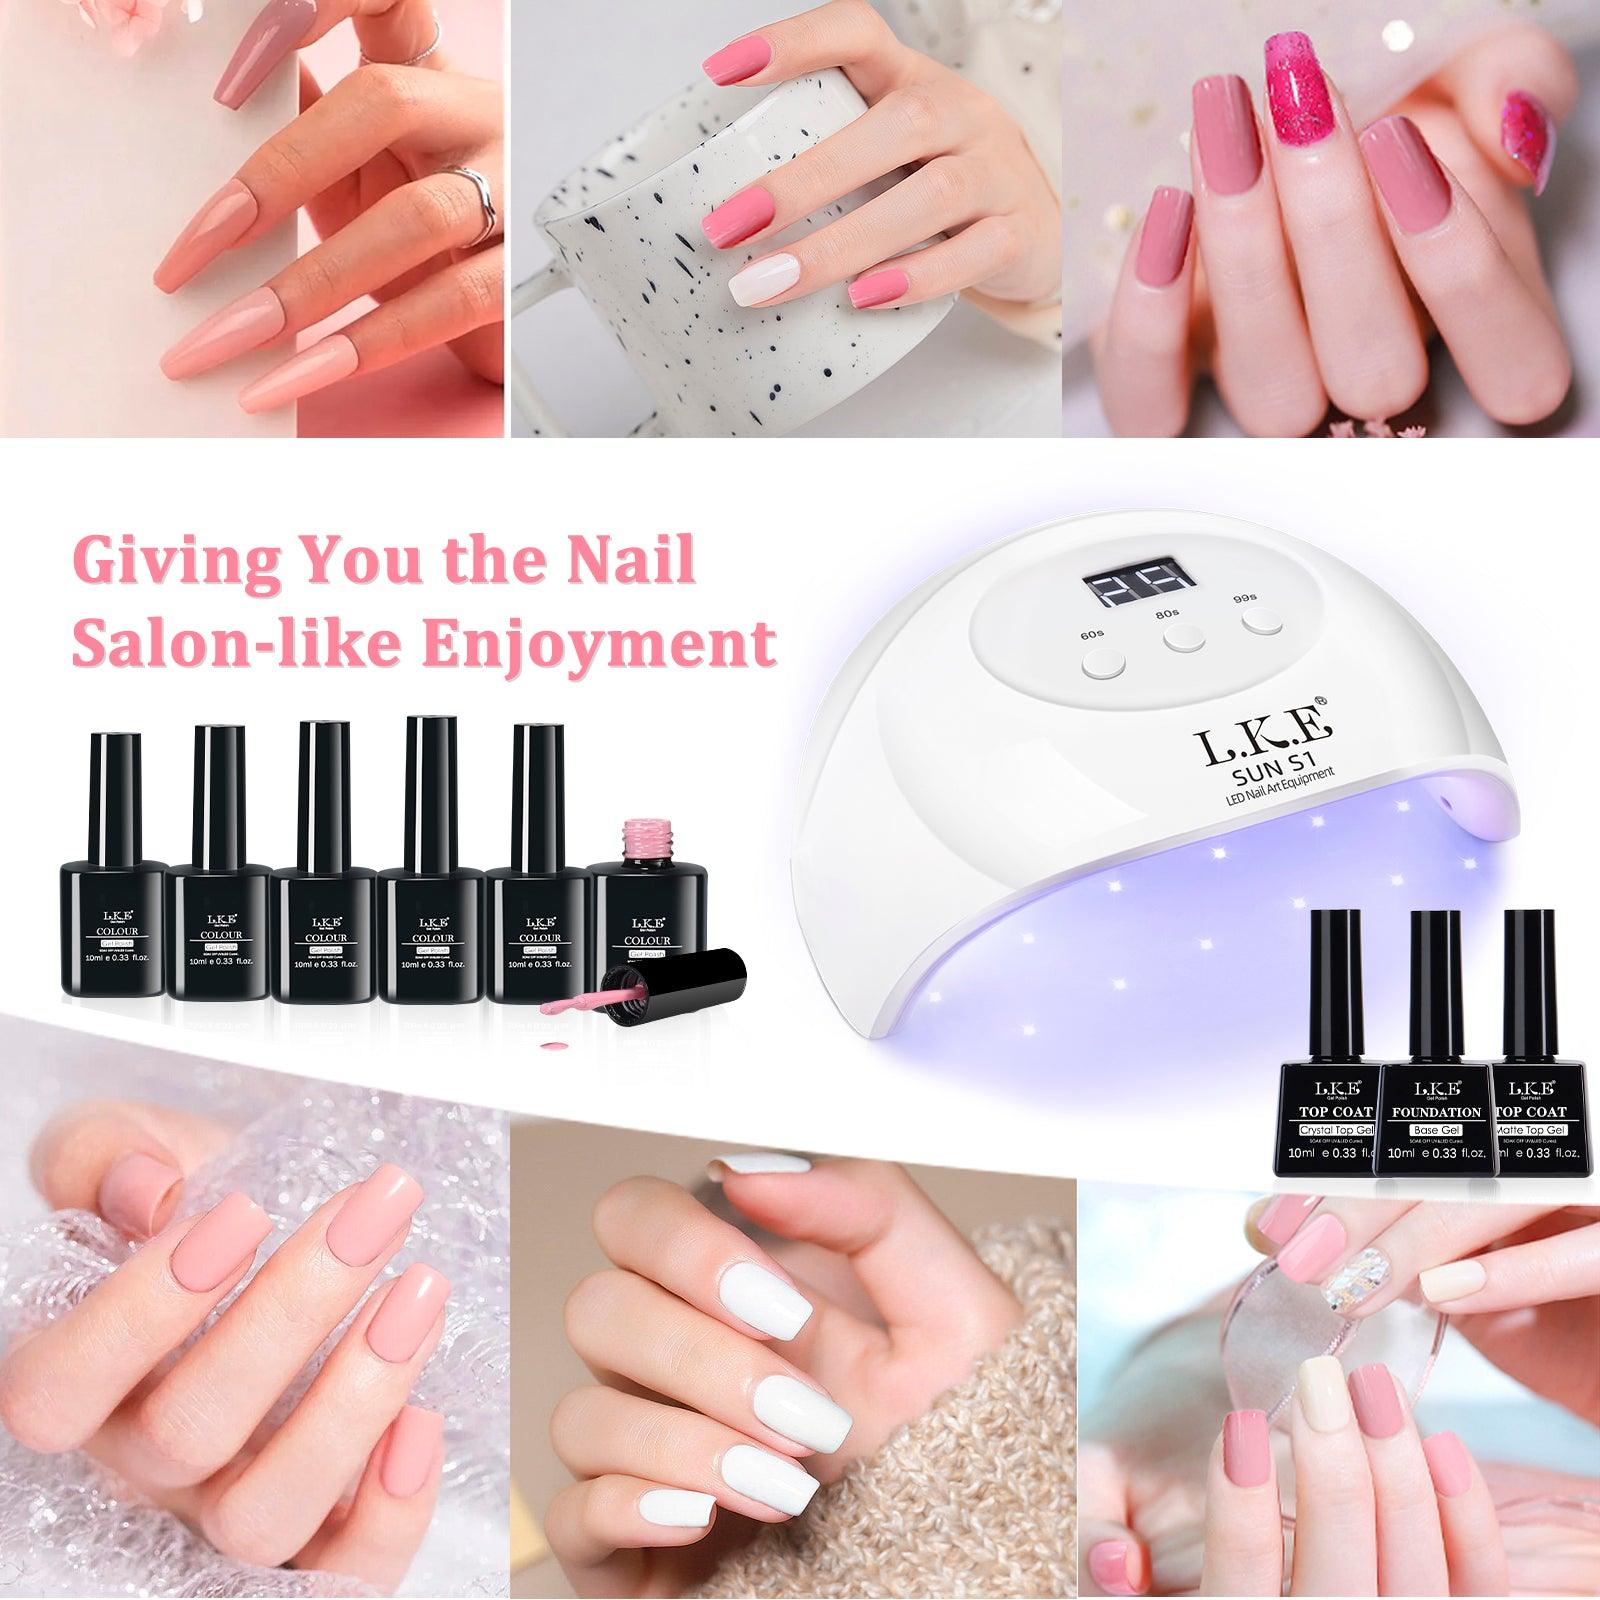 Cherry Blossom Frost-6 color nail polish S1 nail gel kit - LKE nail